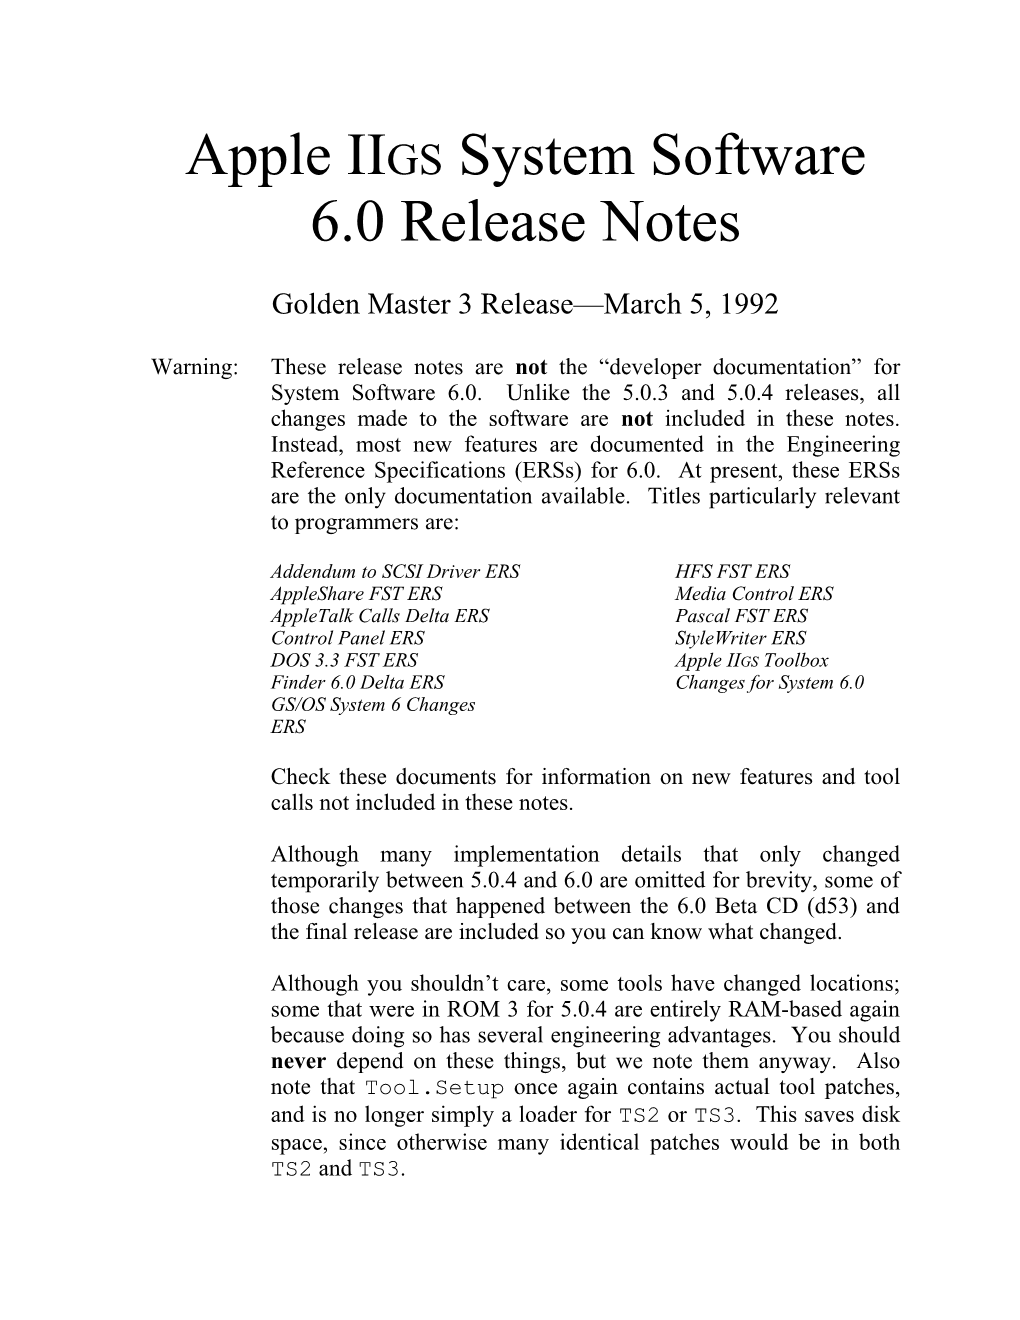 Apple IIGS System Software 6